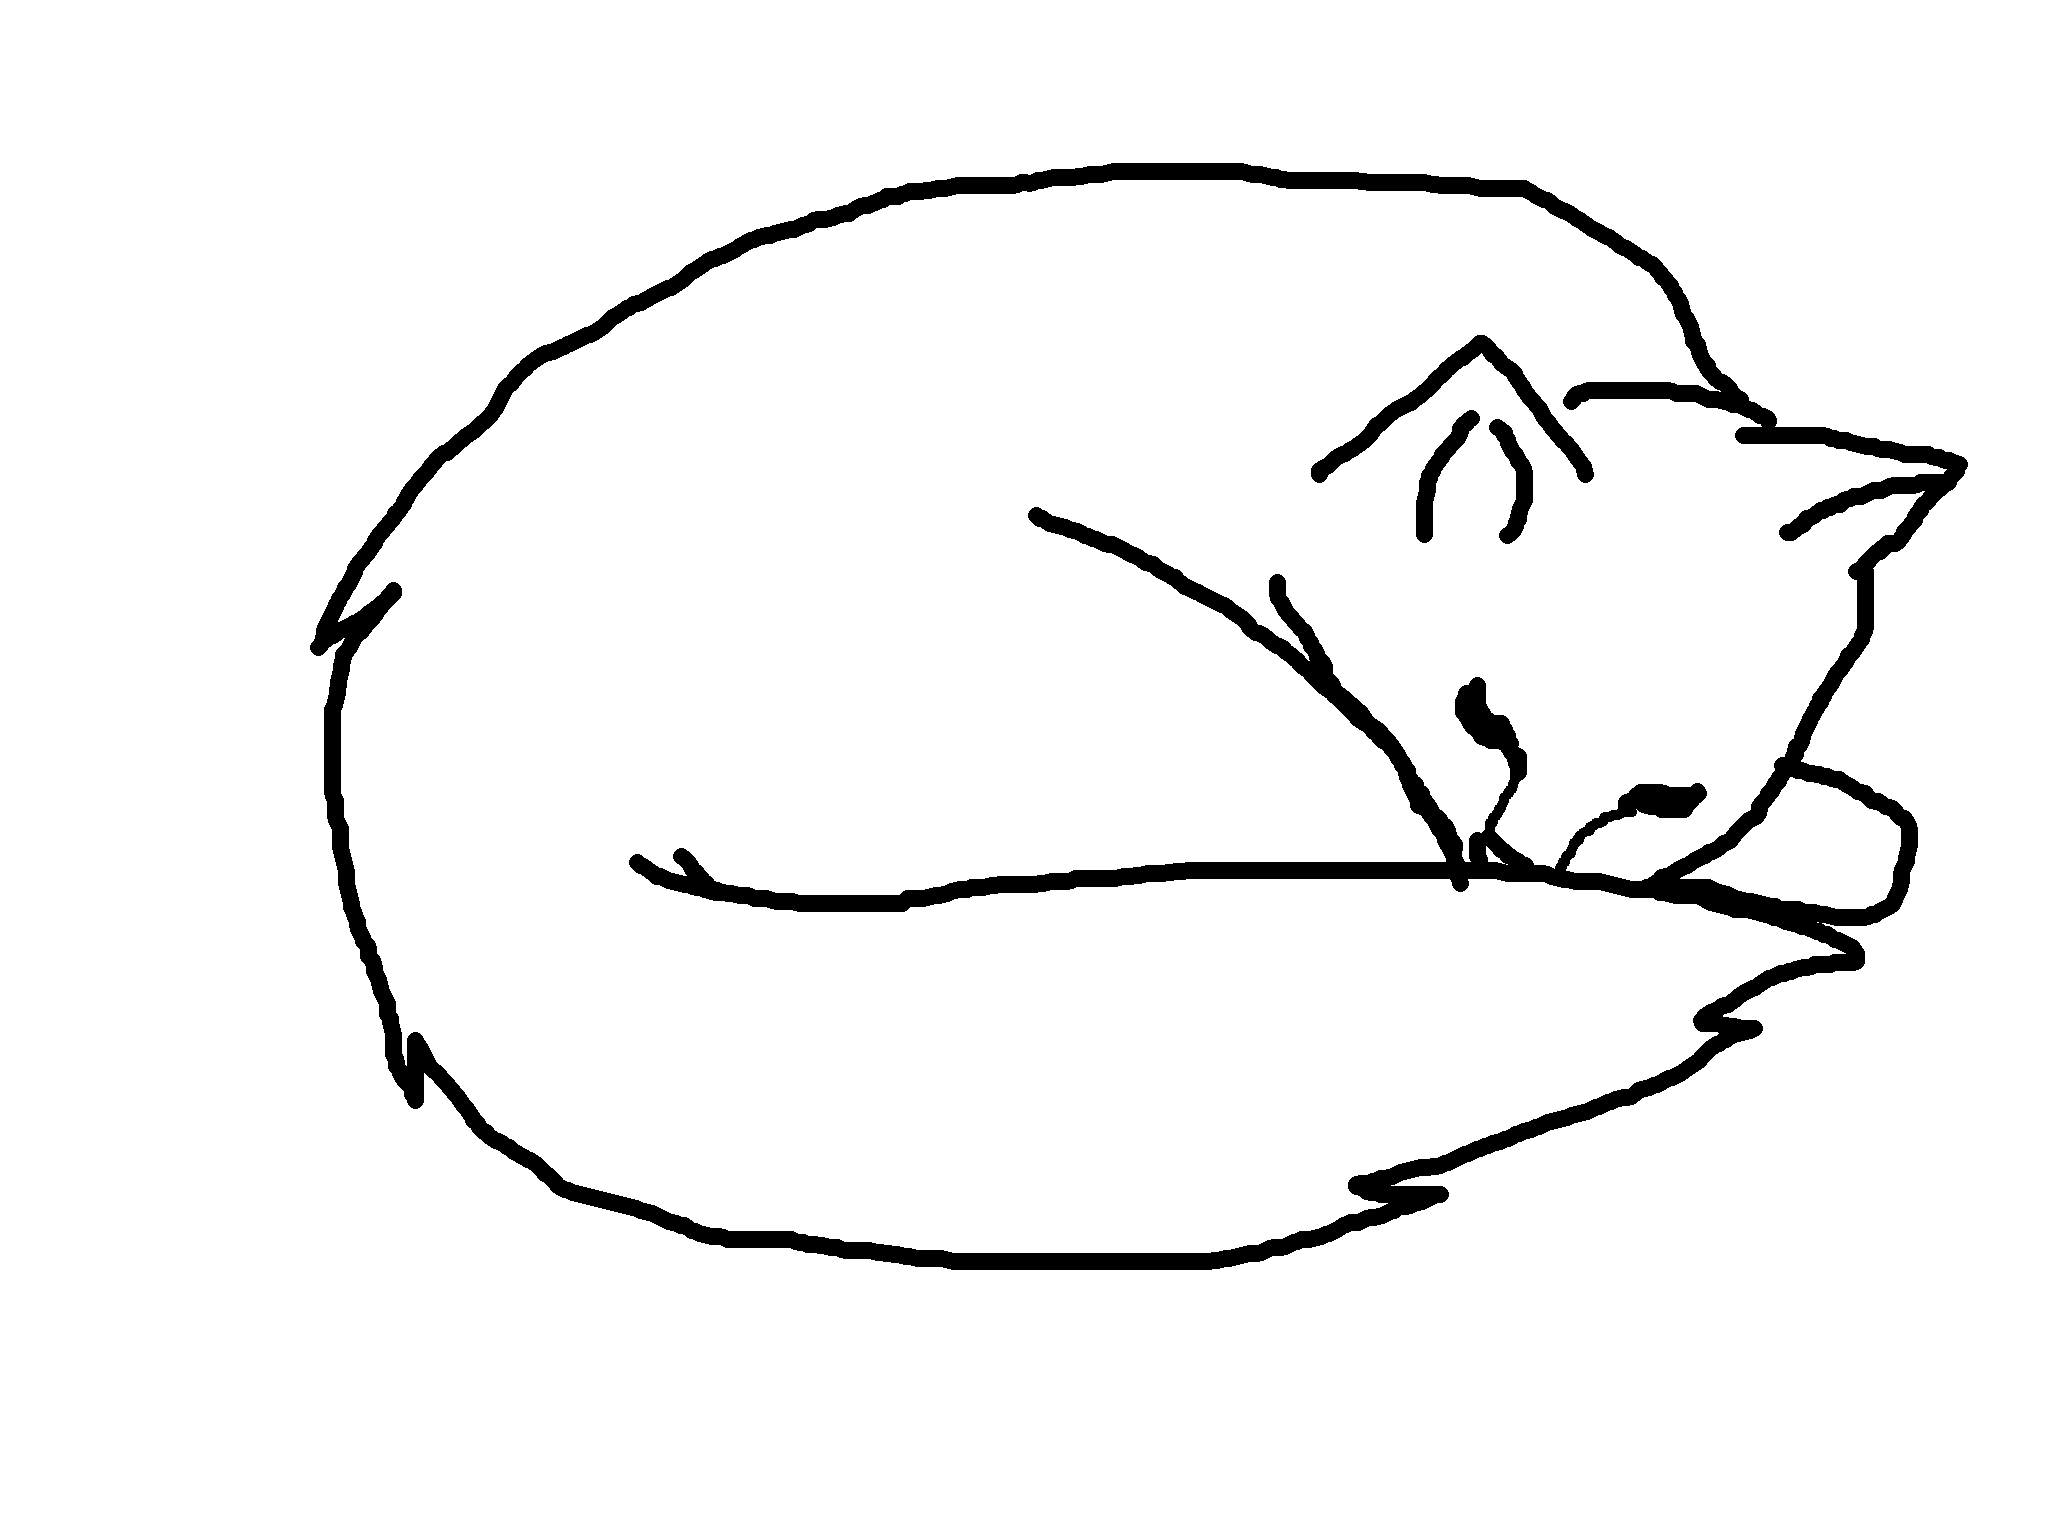 Realistic sleeping cat lineart by Spottedheart22 on deviantART